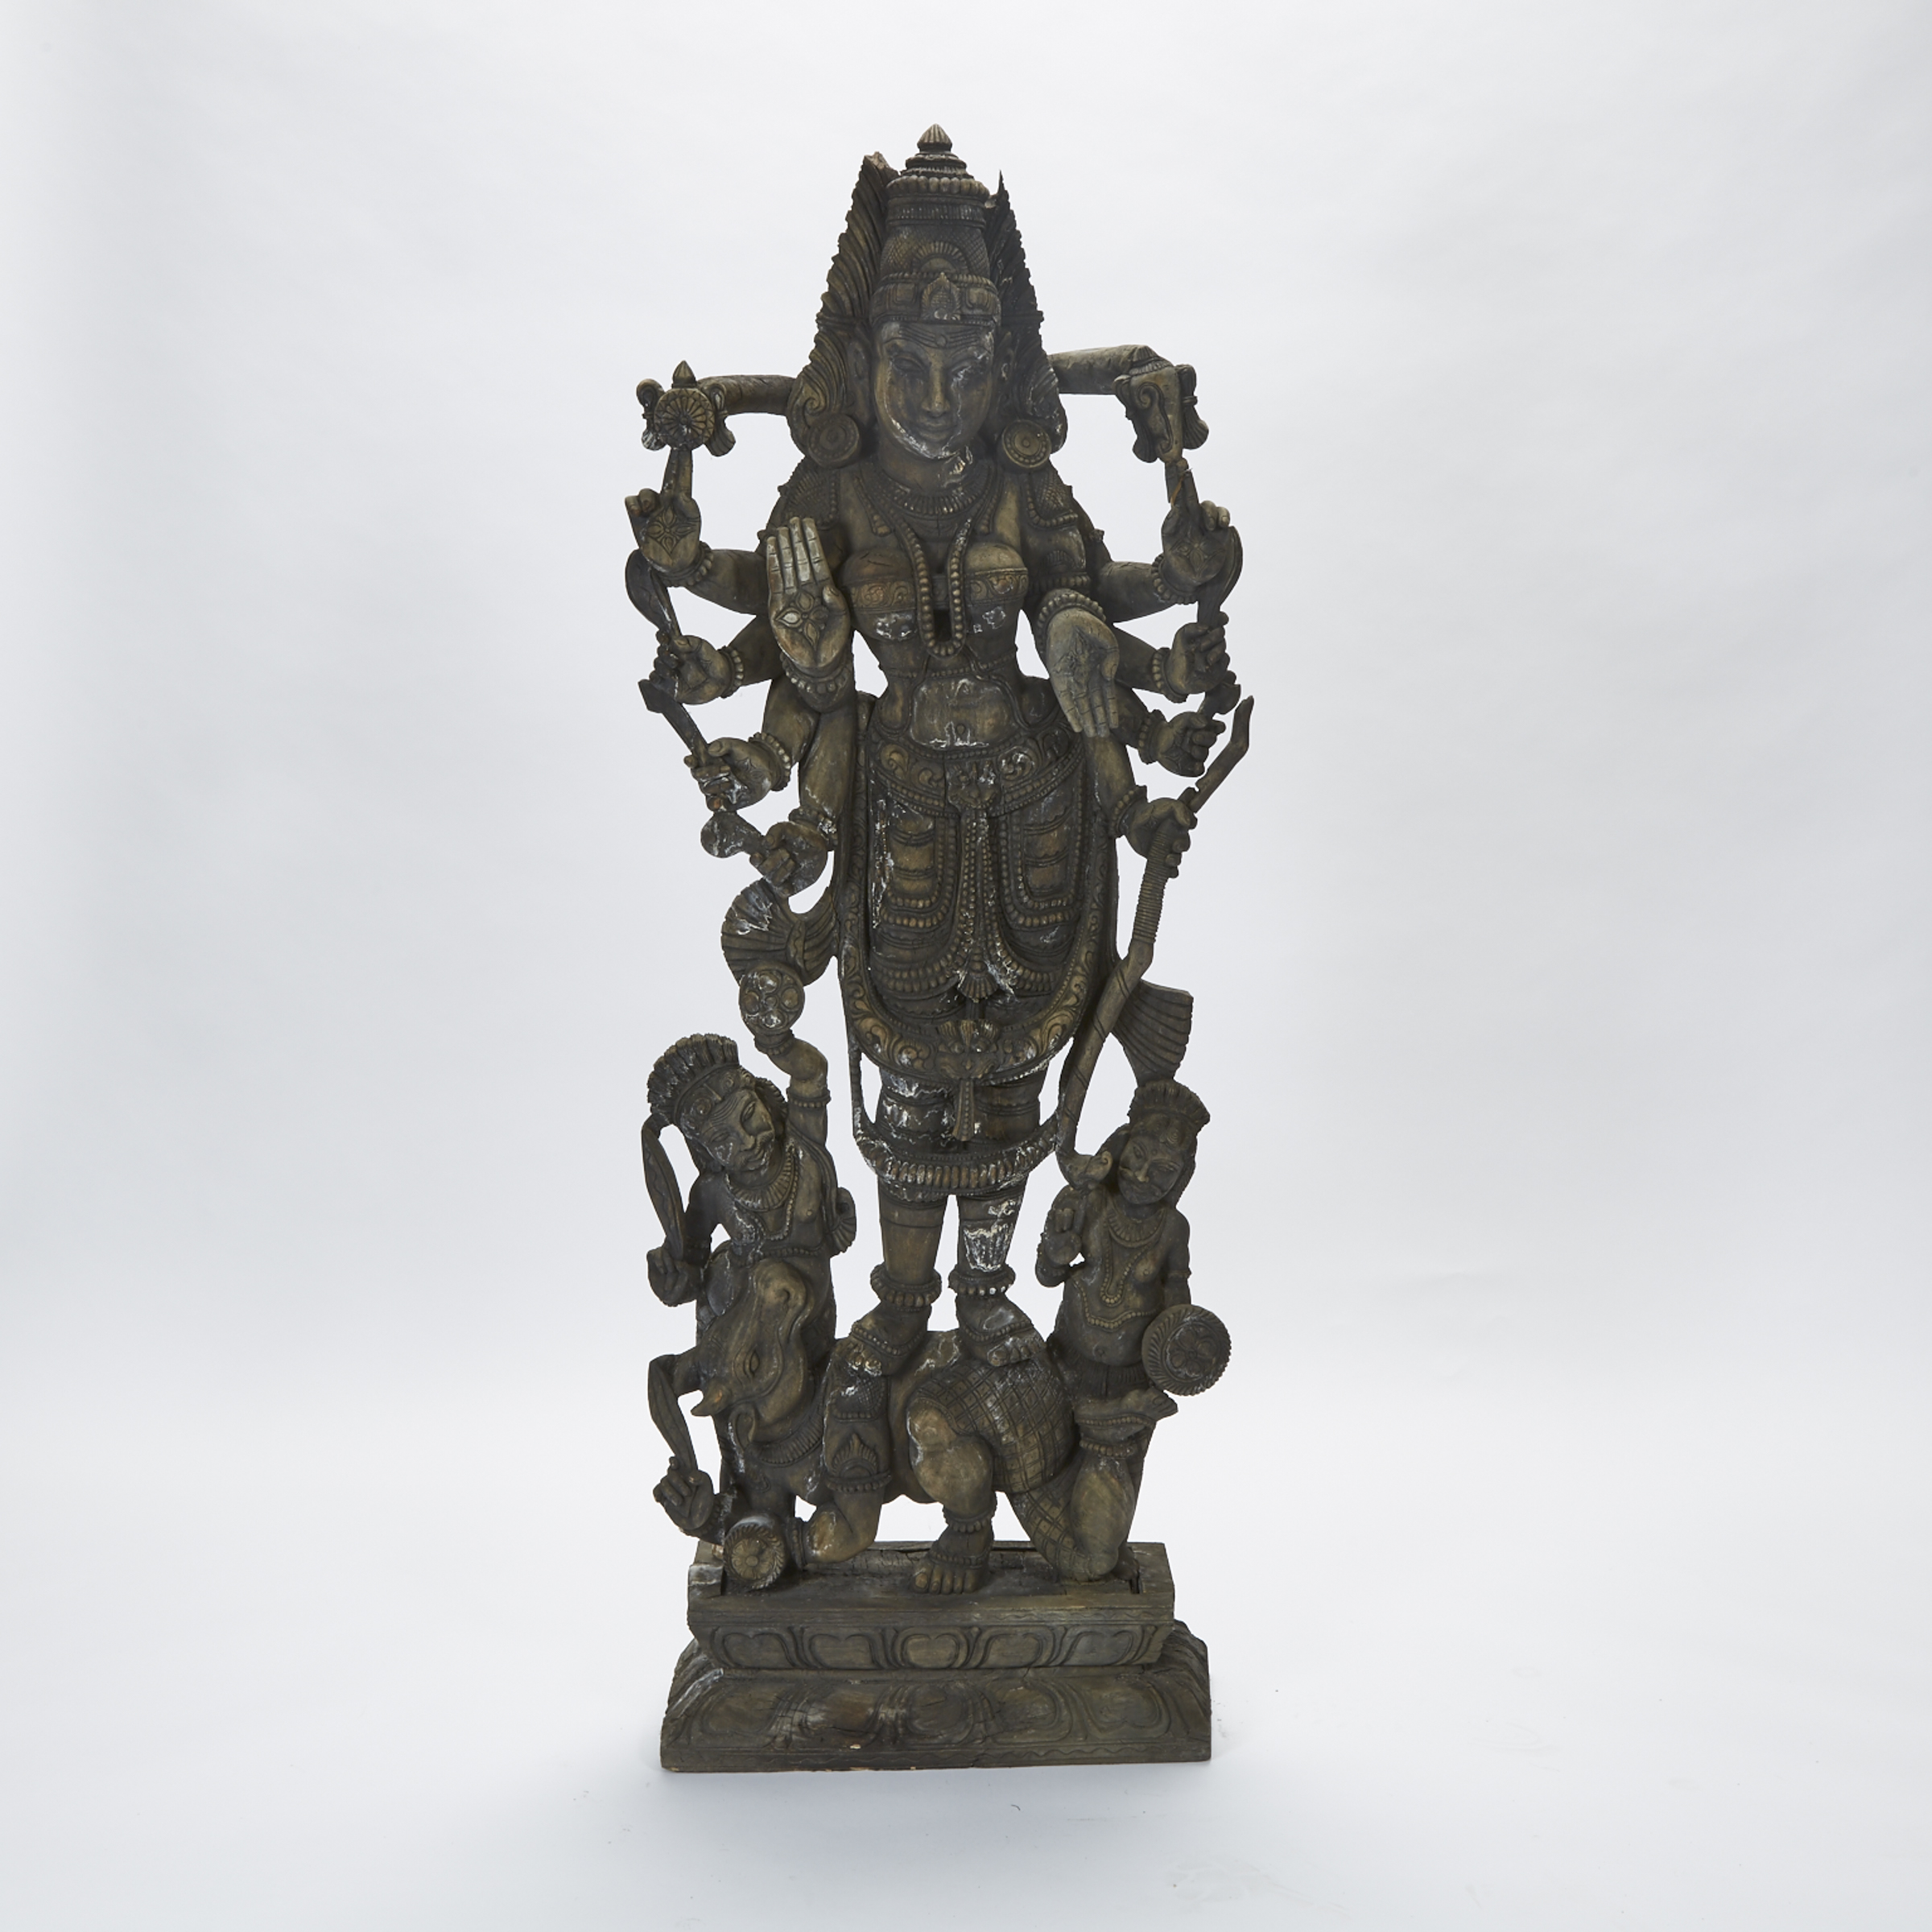 A Large Hardwood Standing Figure of Durga Mahishasuramardini